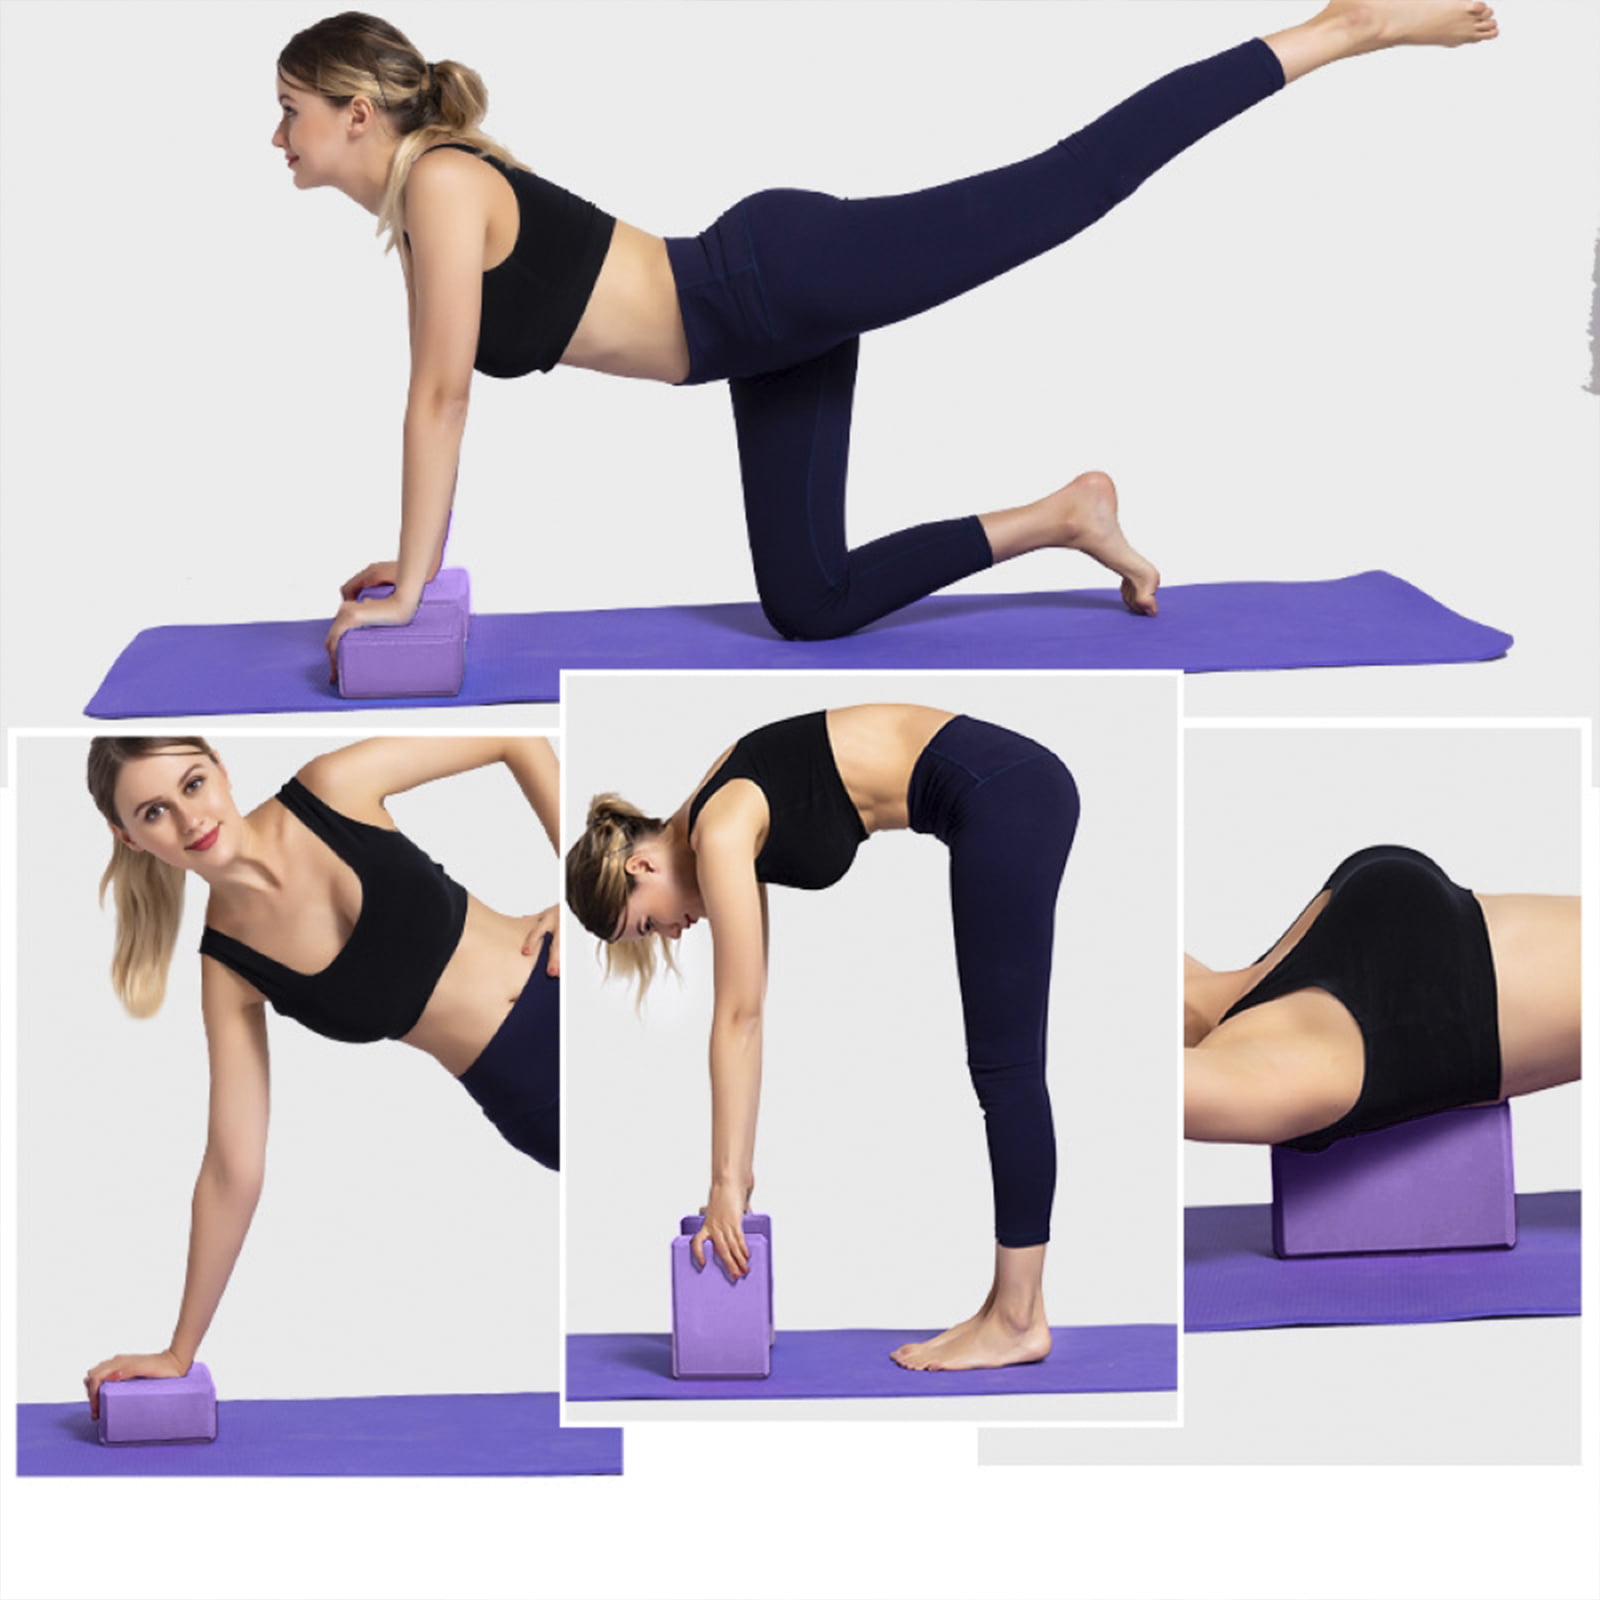 Yoga Blocks 9''x6''x3'', 4 Pack High Density Yoga Brick Foam Blocks to  Improve Strength, Flexibility and Balance, Light Weight and Non-Slip  Surface